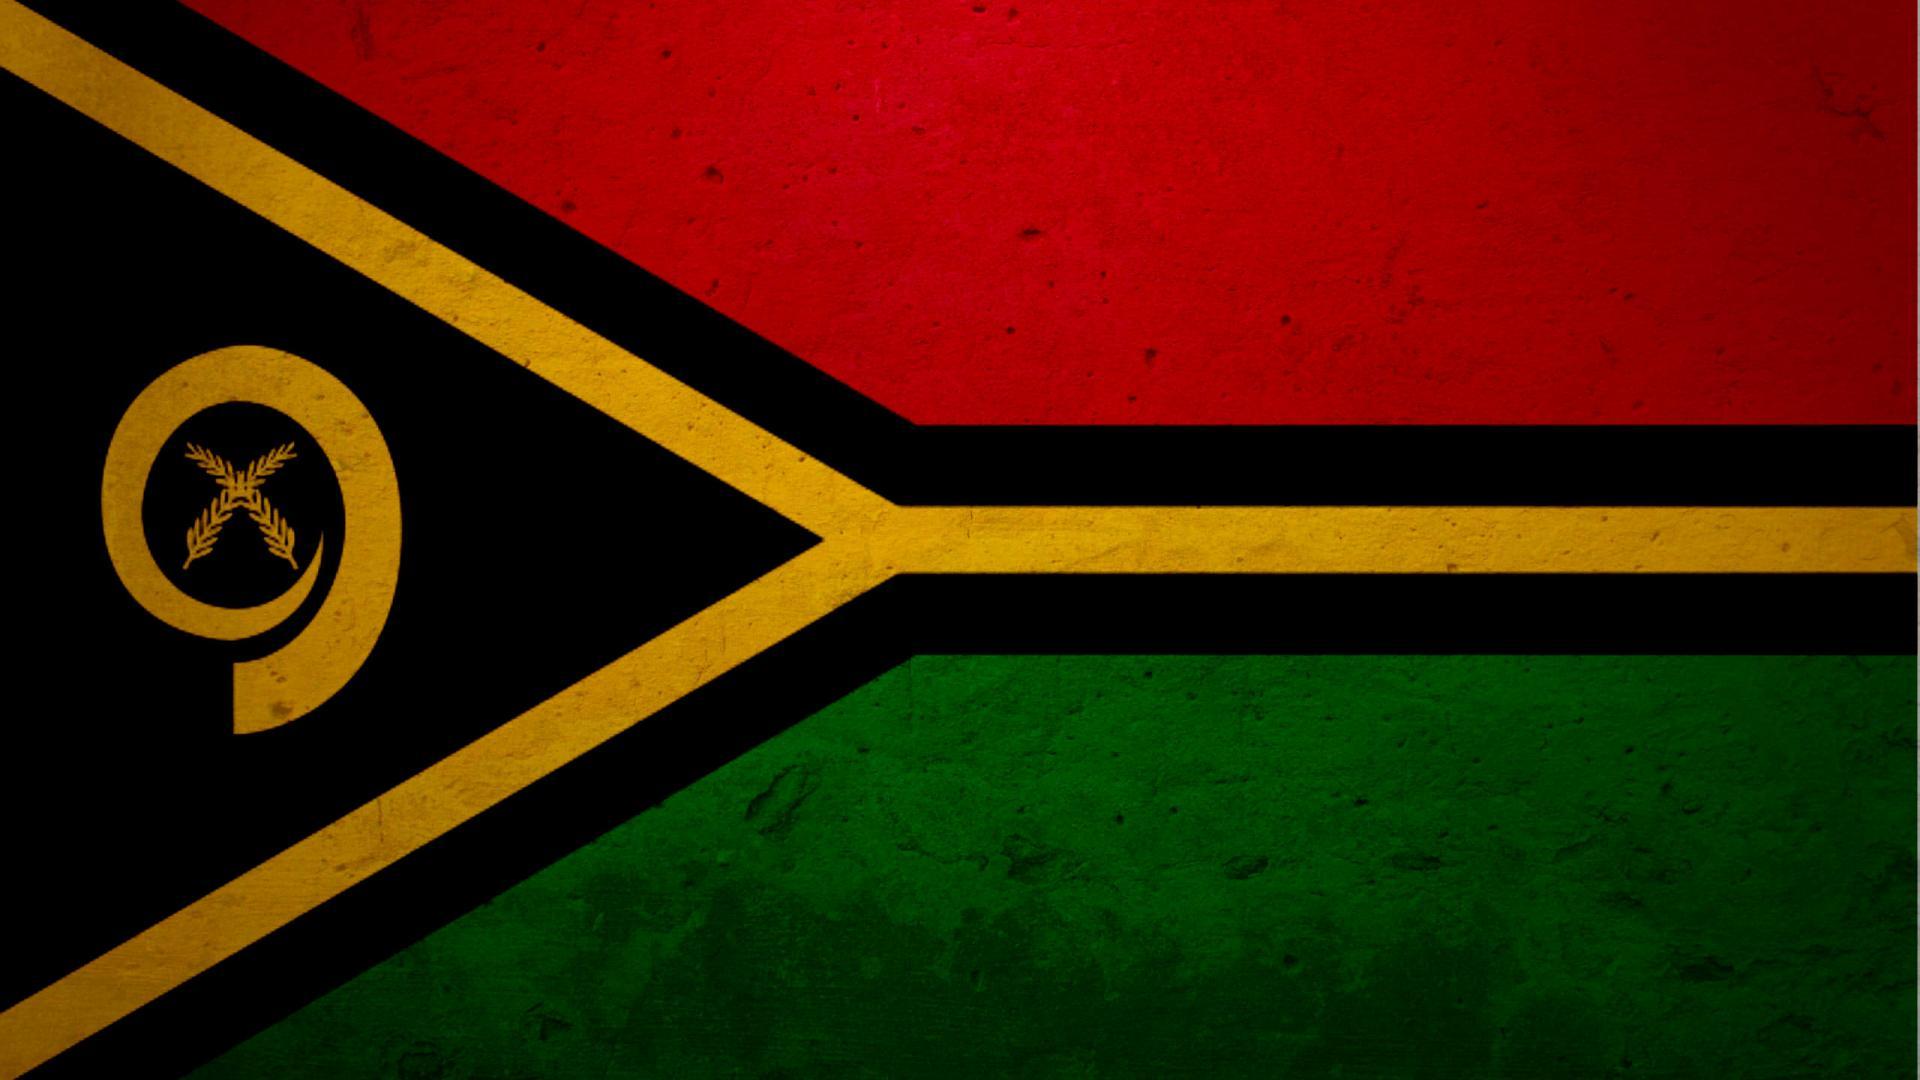 Vanuatu Flag, High Definition, High Quality, Widescreen